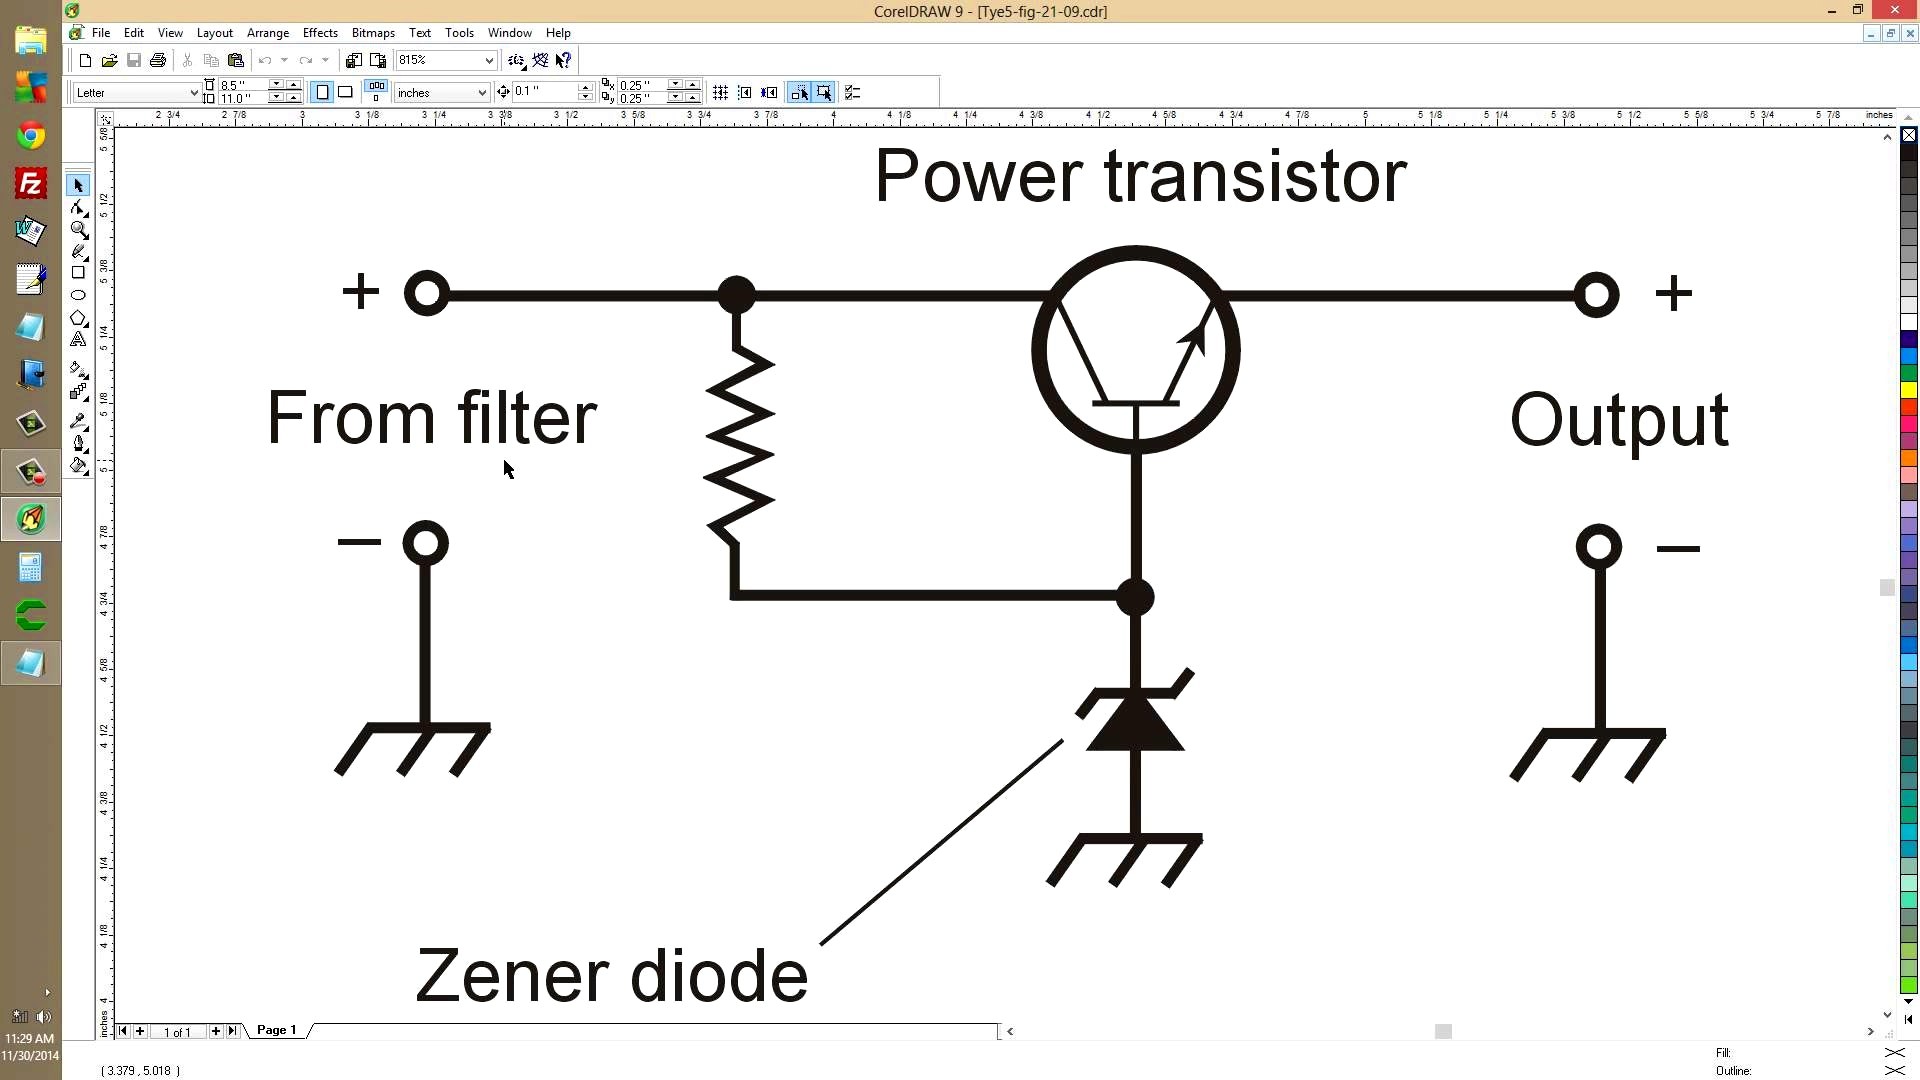 Appealing Zener Diode Dc Voltage Regulator Transistor Series Circuit Diagram Full size